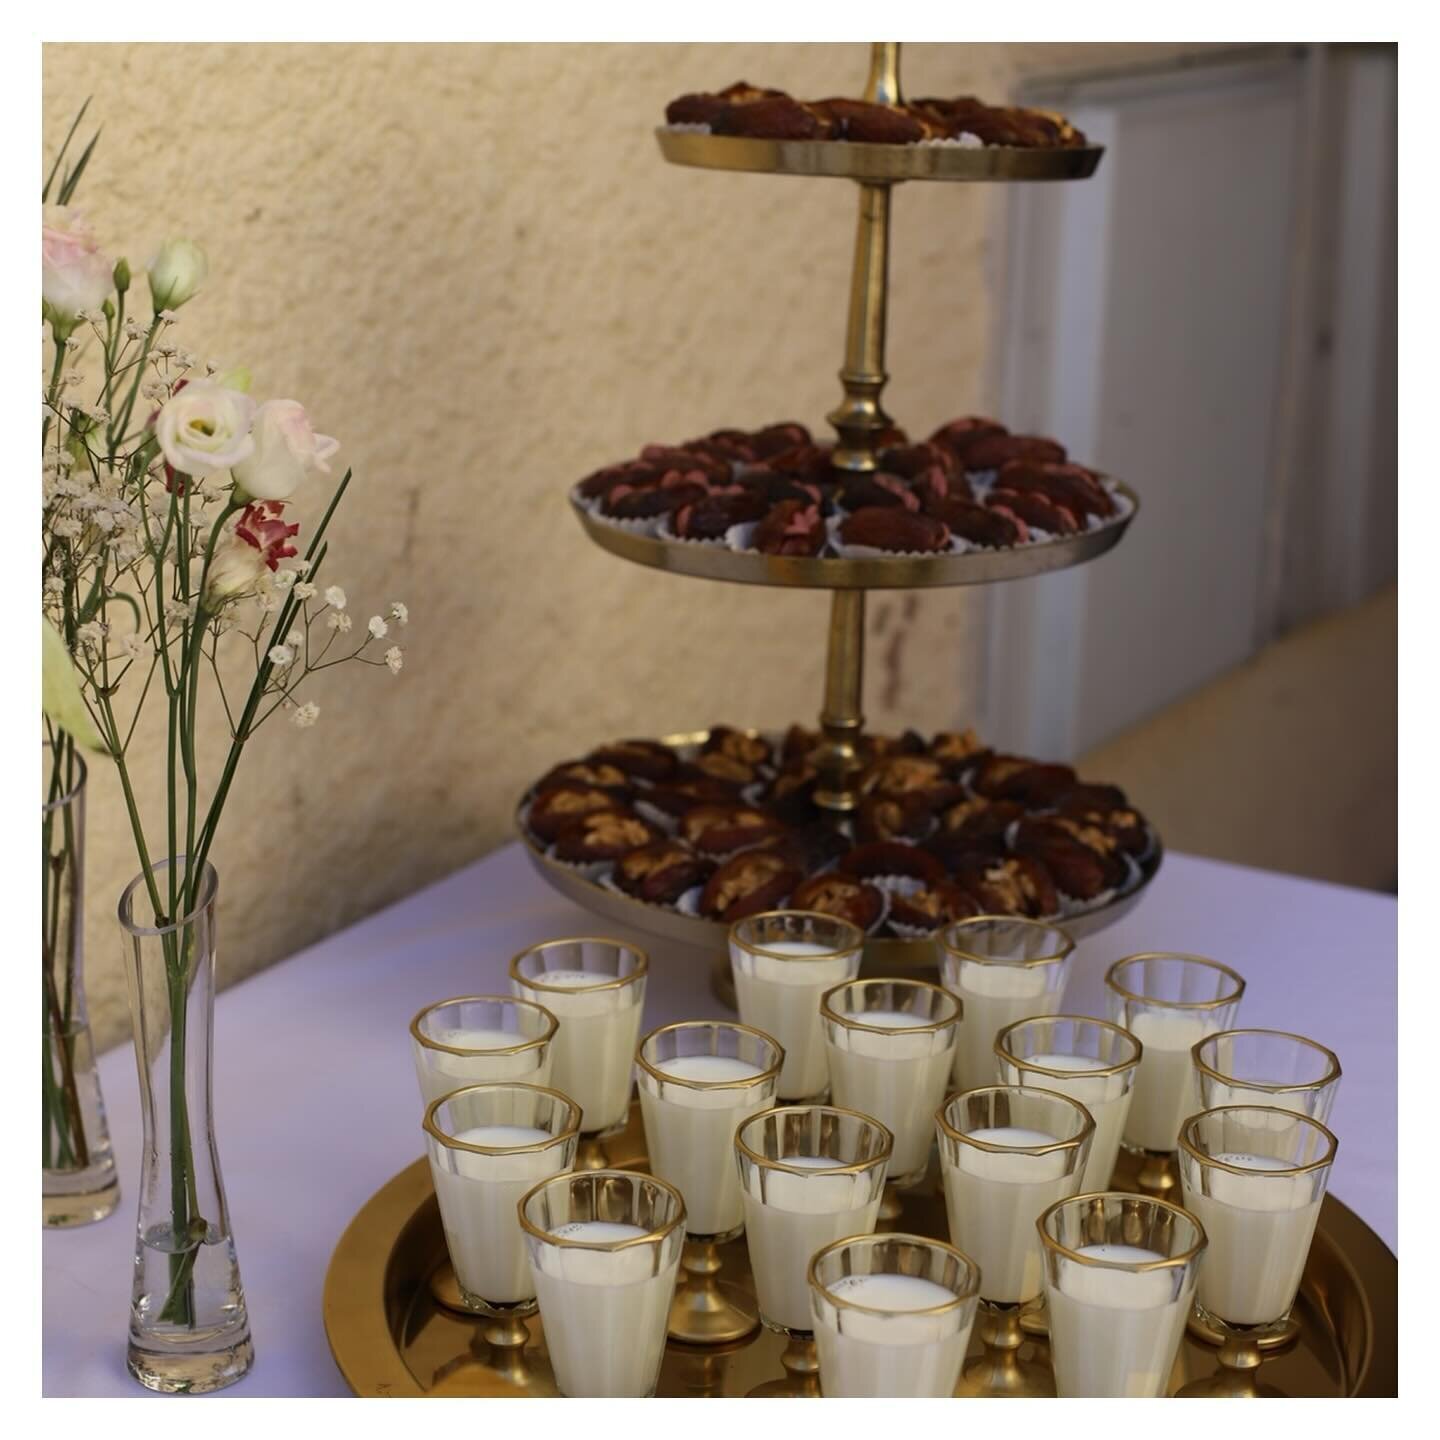 { Real wedding by Noor } La tradition du lait et des dattes 🥛🌴
.
.
.
#mariageoriental #traditiondemariage #laitetdattes #welcoming #noorweddings